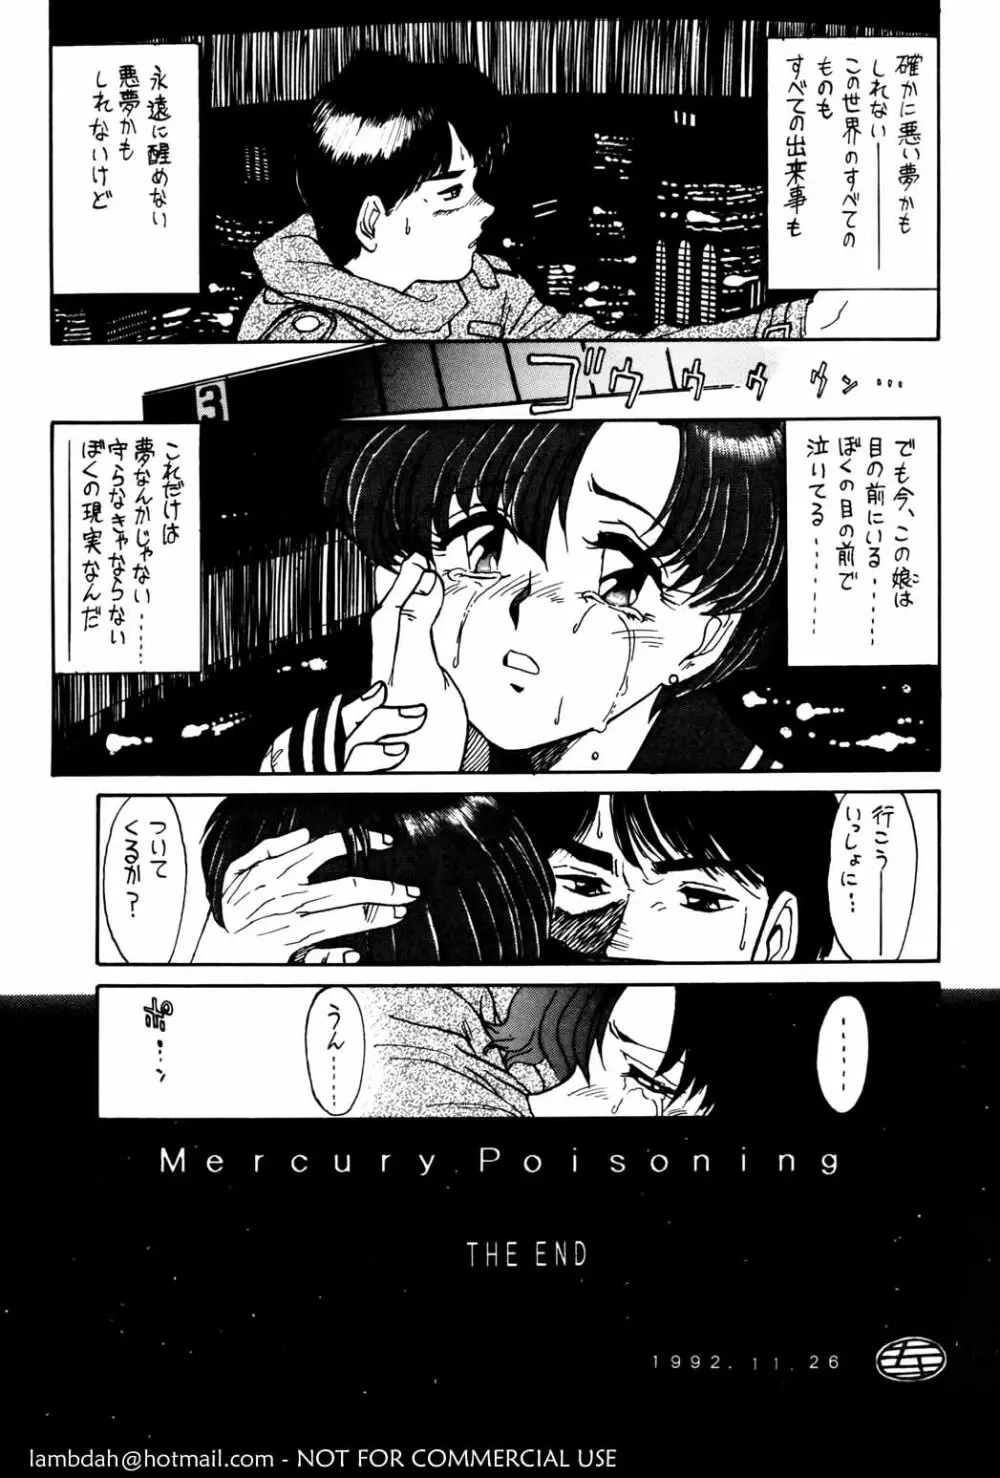 Mercury Poisoning Page.27